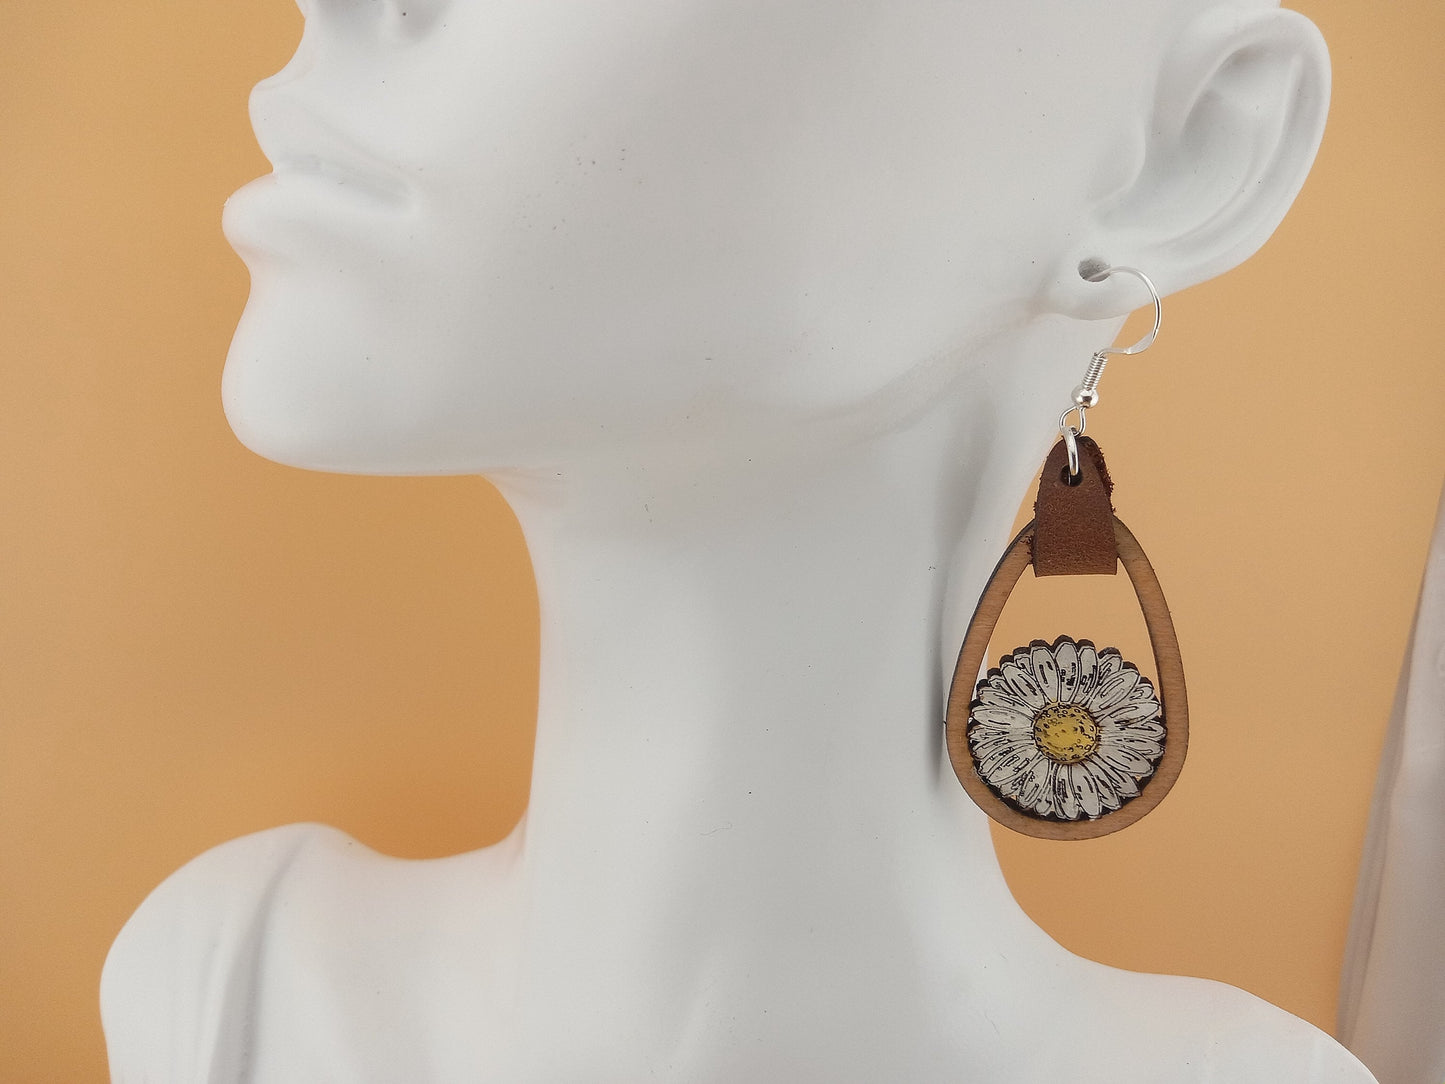 Teardrop daisy earrings with leather connector